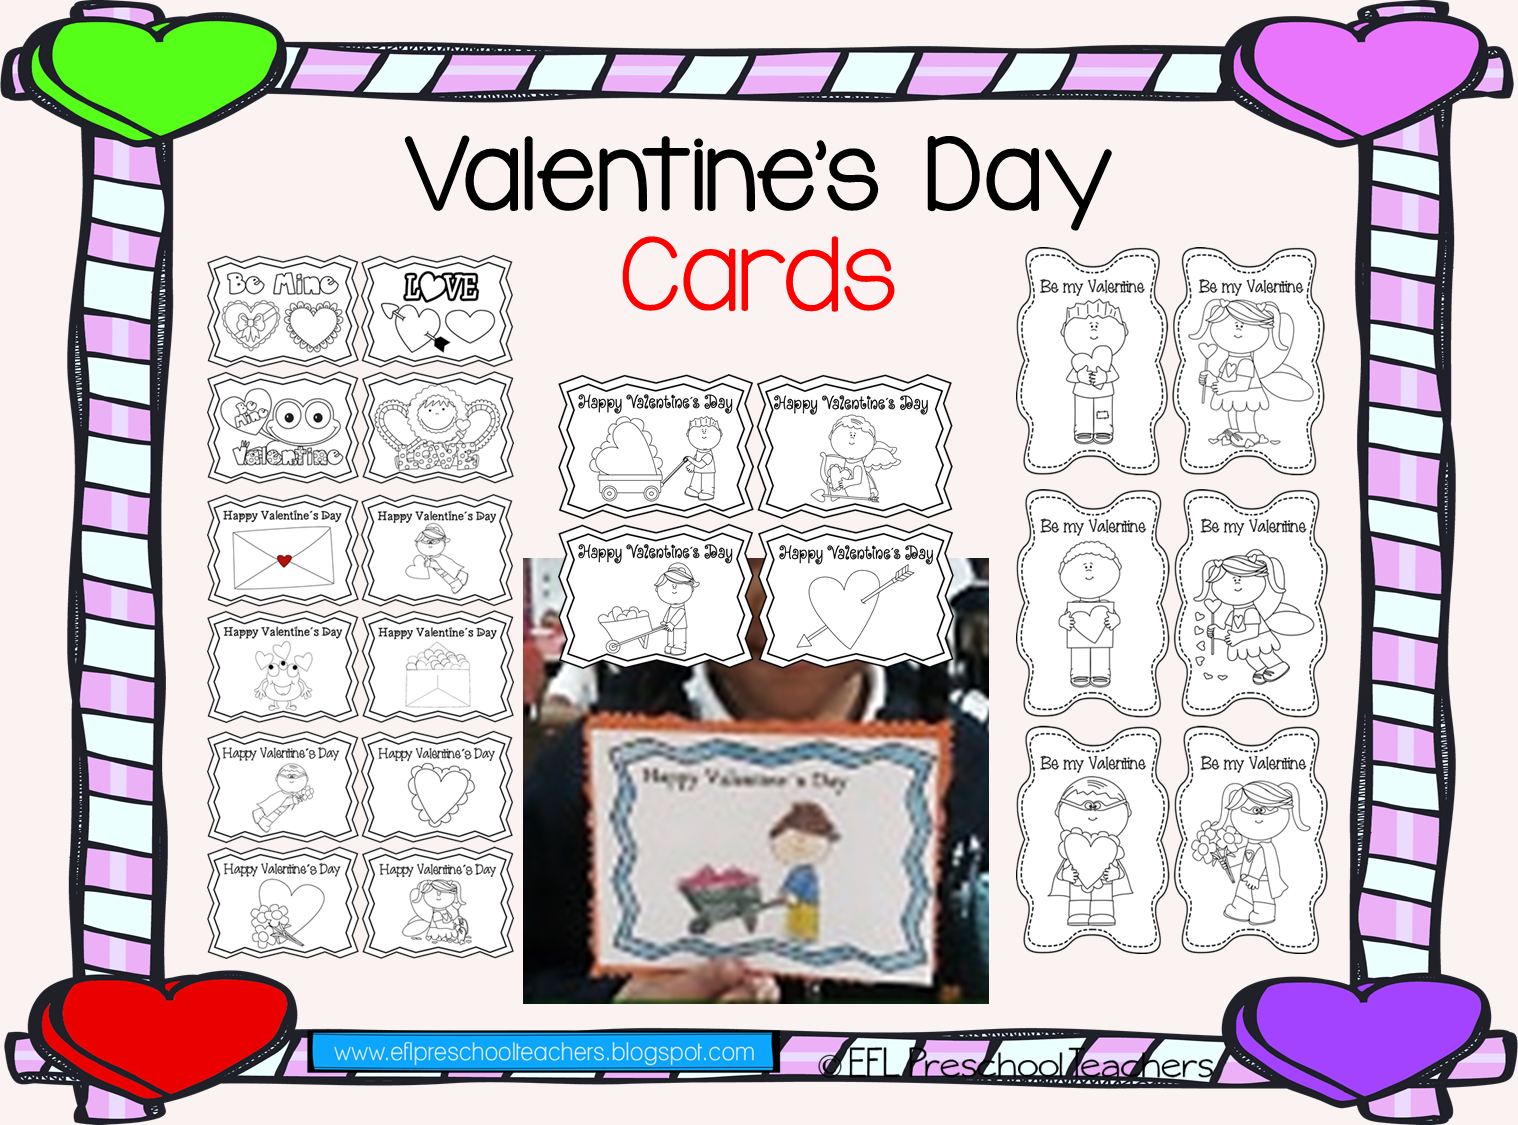 esl-efl-preschool-teachers-valentine-s-cards